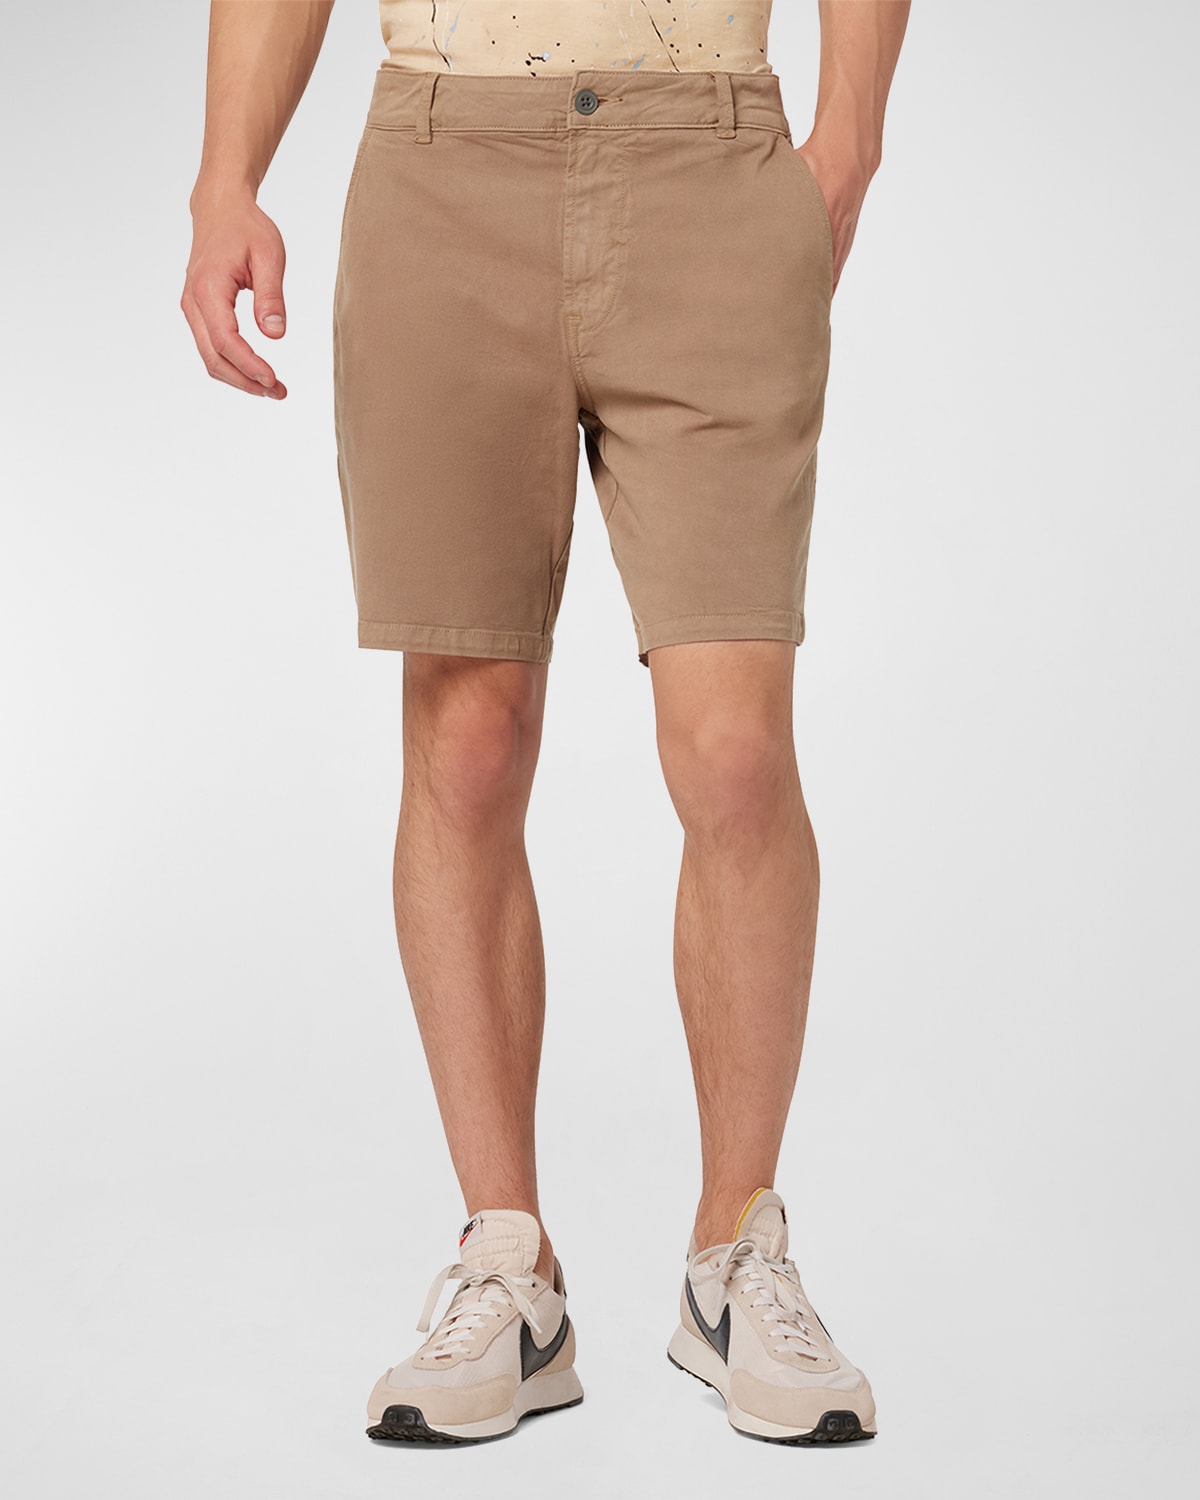 Men's Solid Chino Shorts